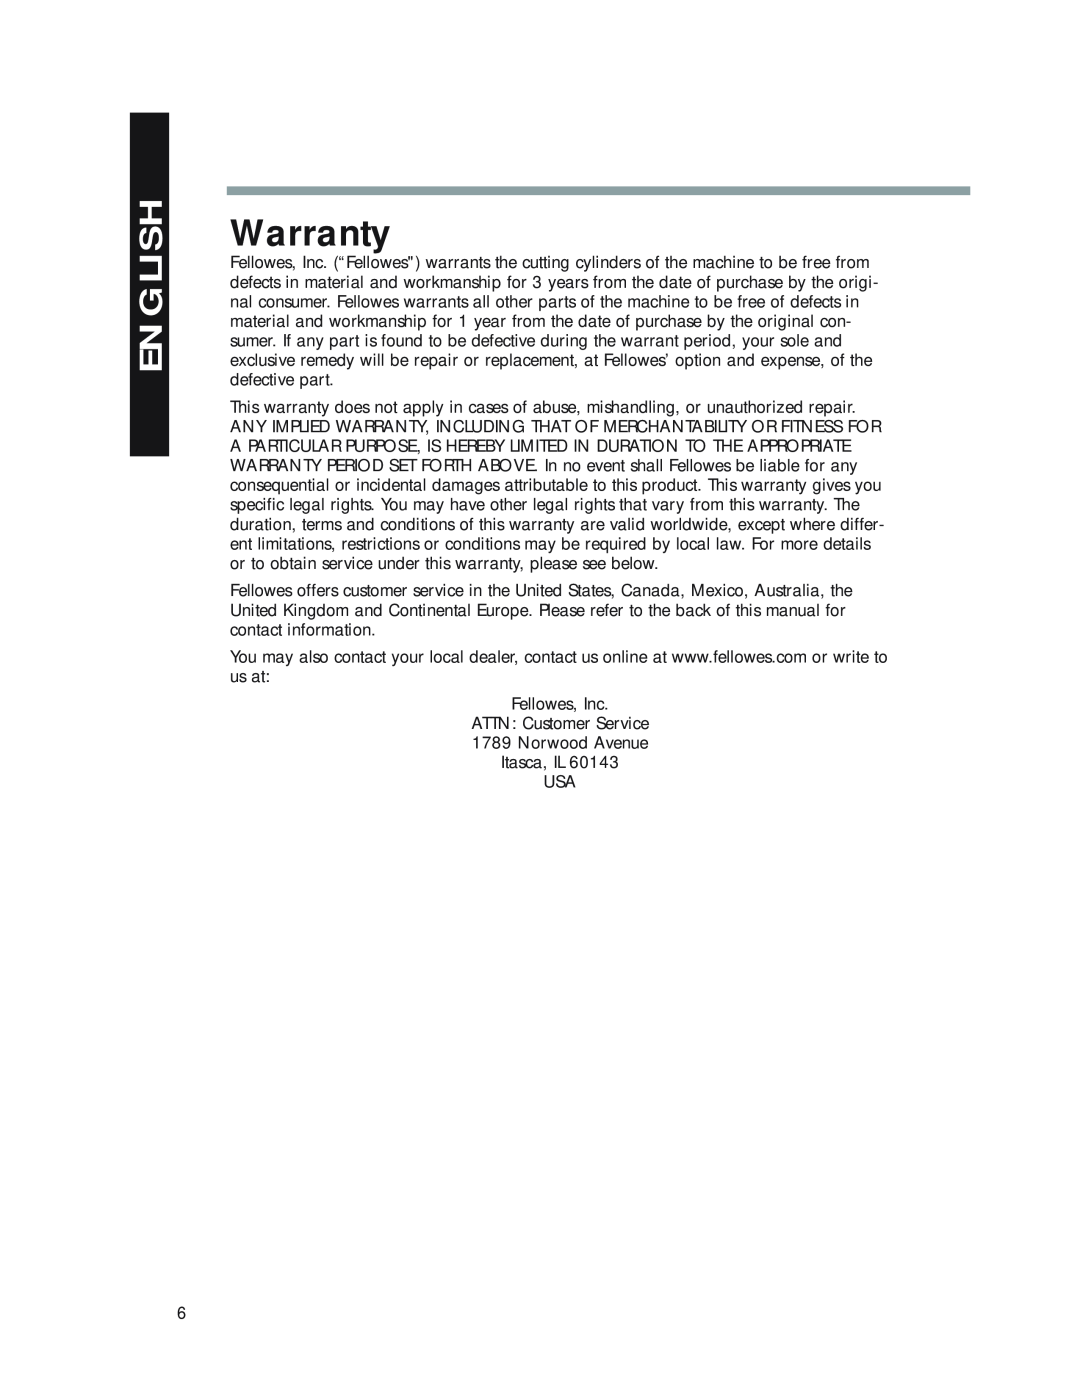 Fellowes P50CM manual Warranty, English 